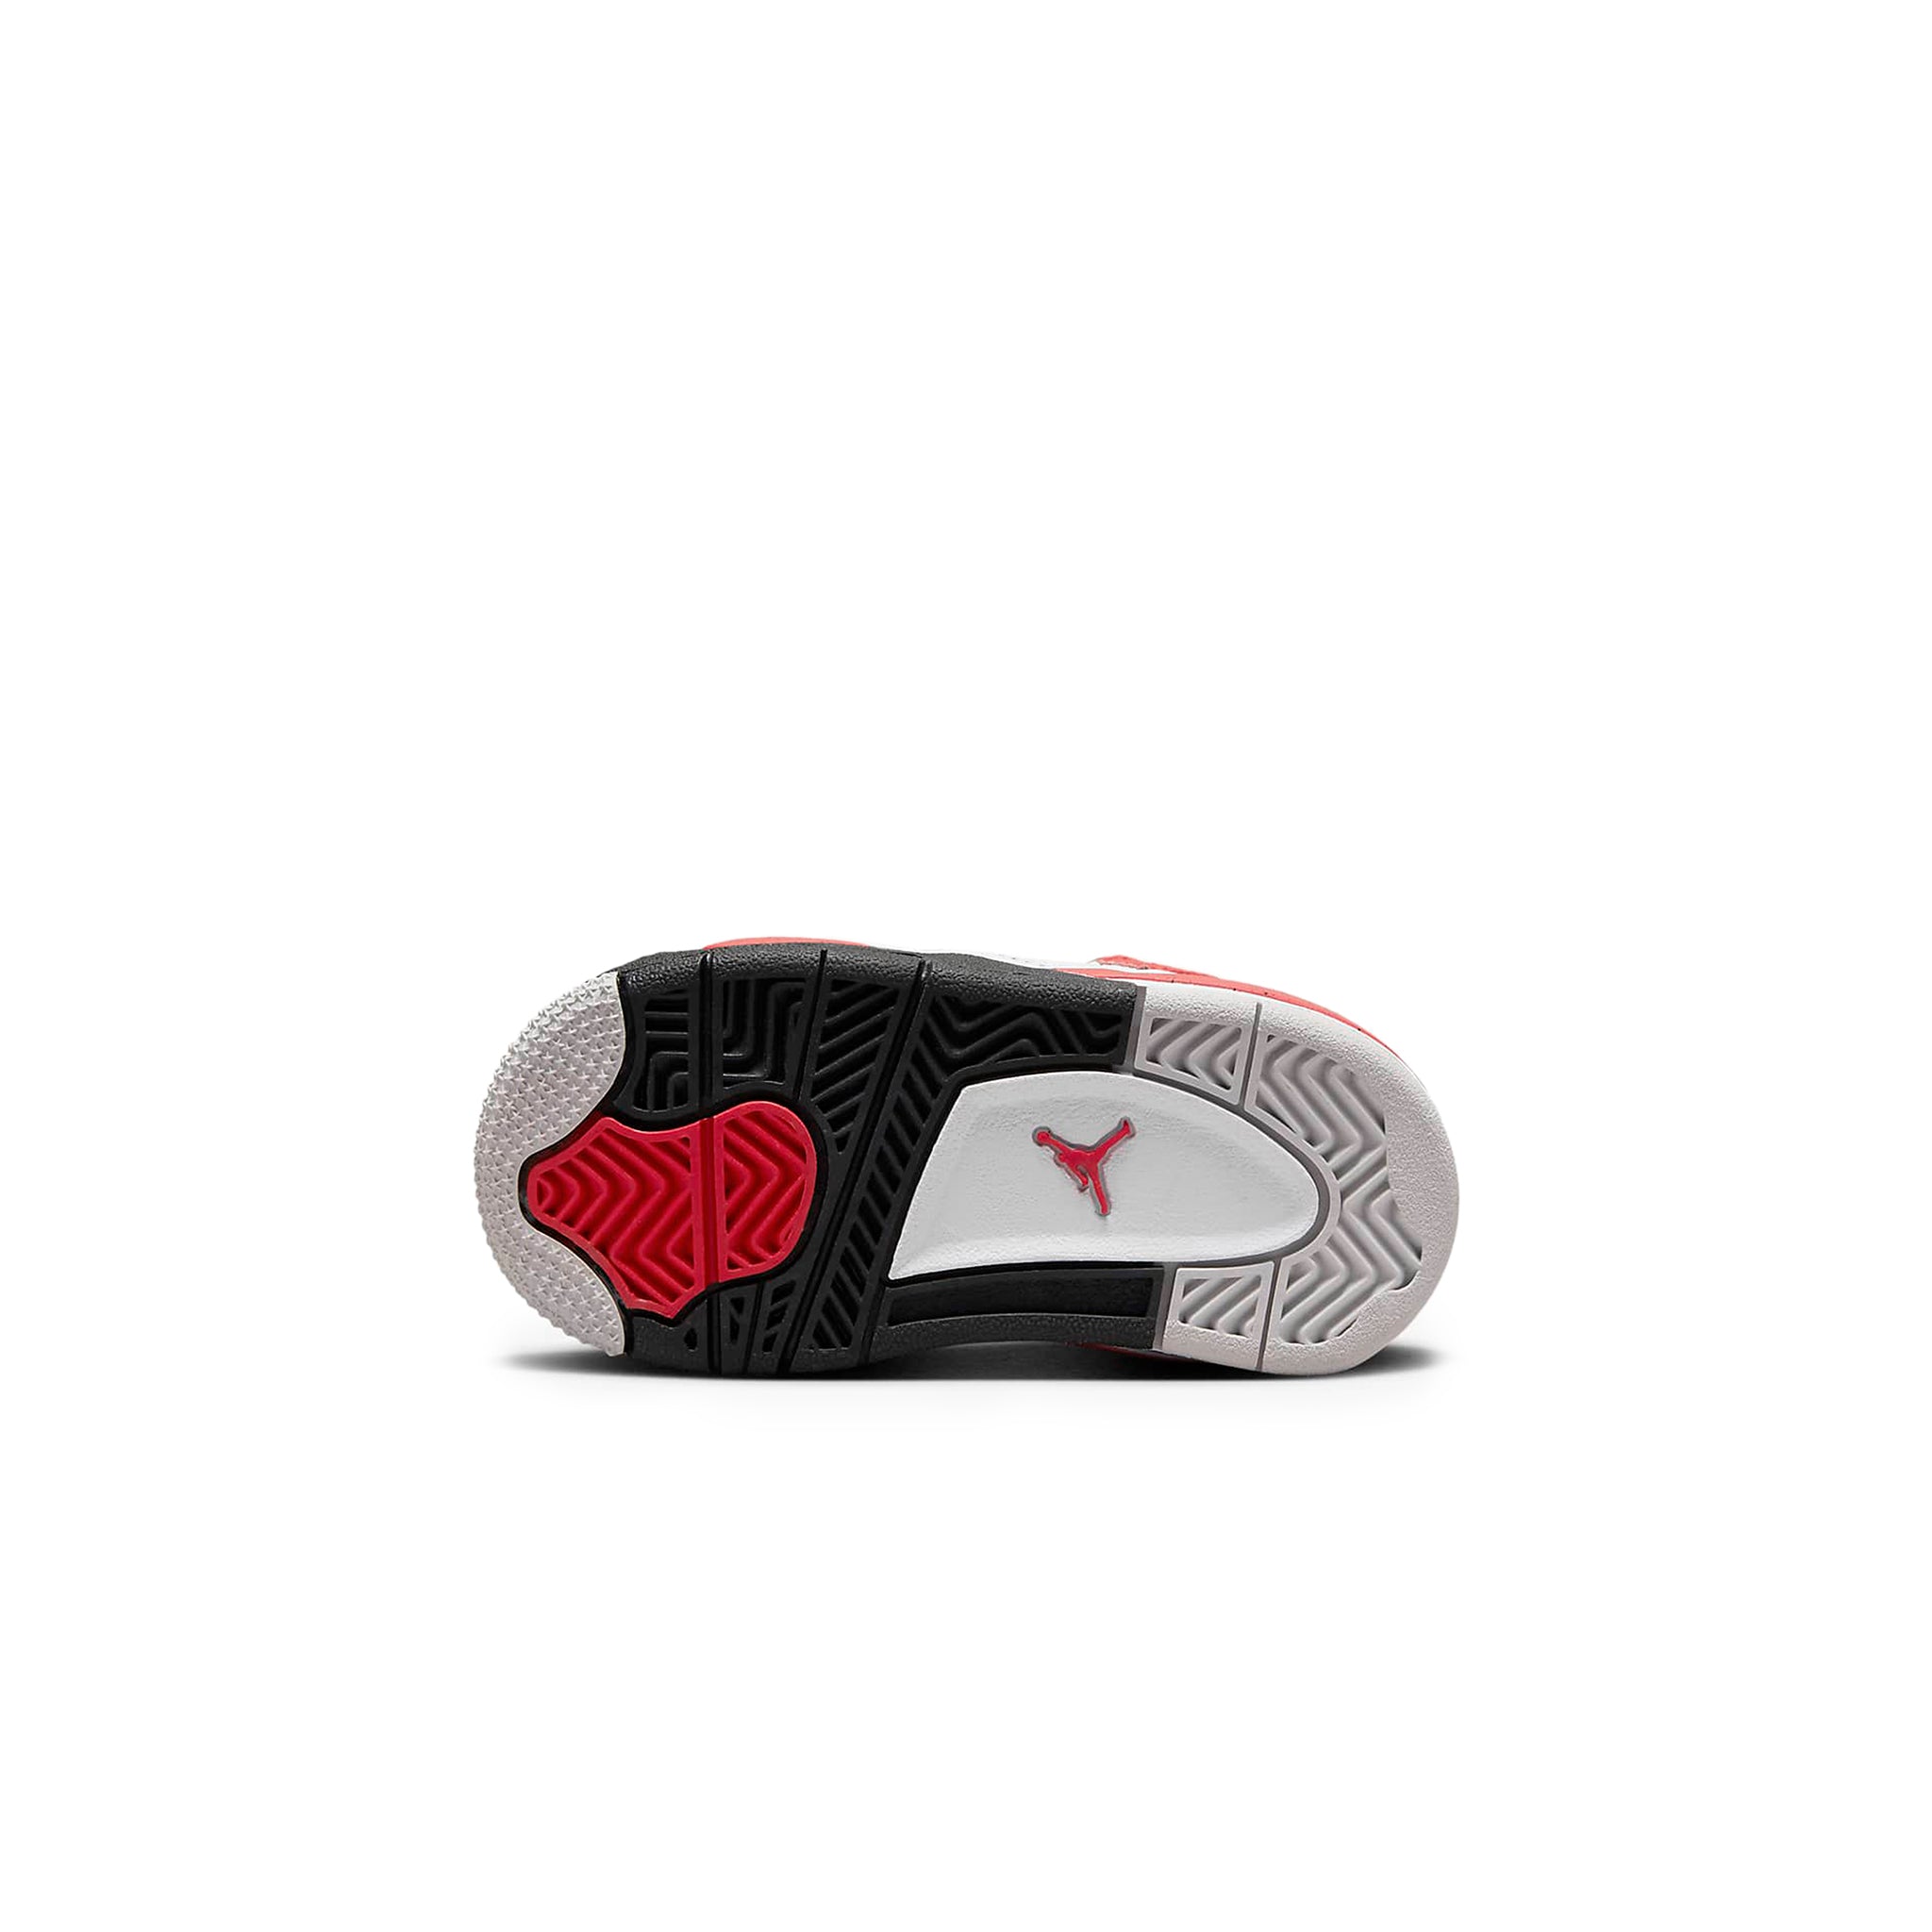 Sole view of Air Jordan 4 Retro Red Cement (2023) (TD) BQ7670-161